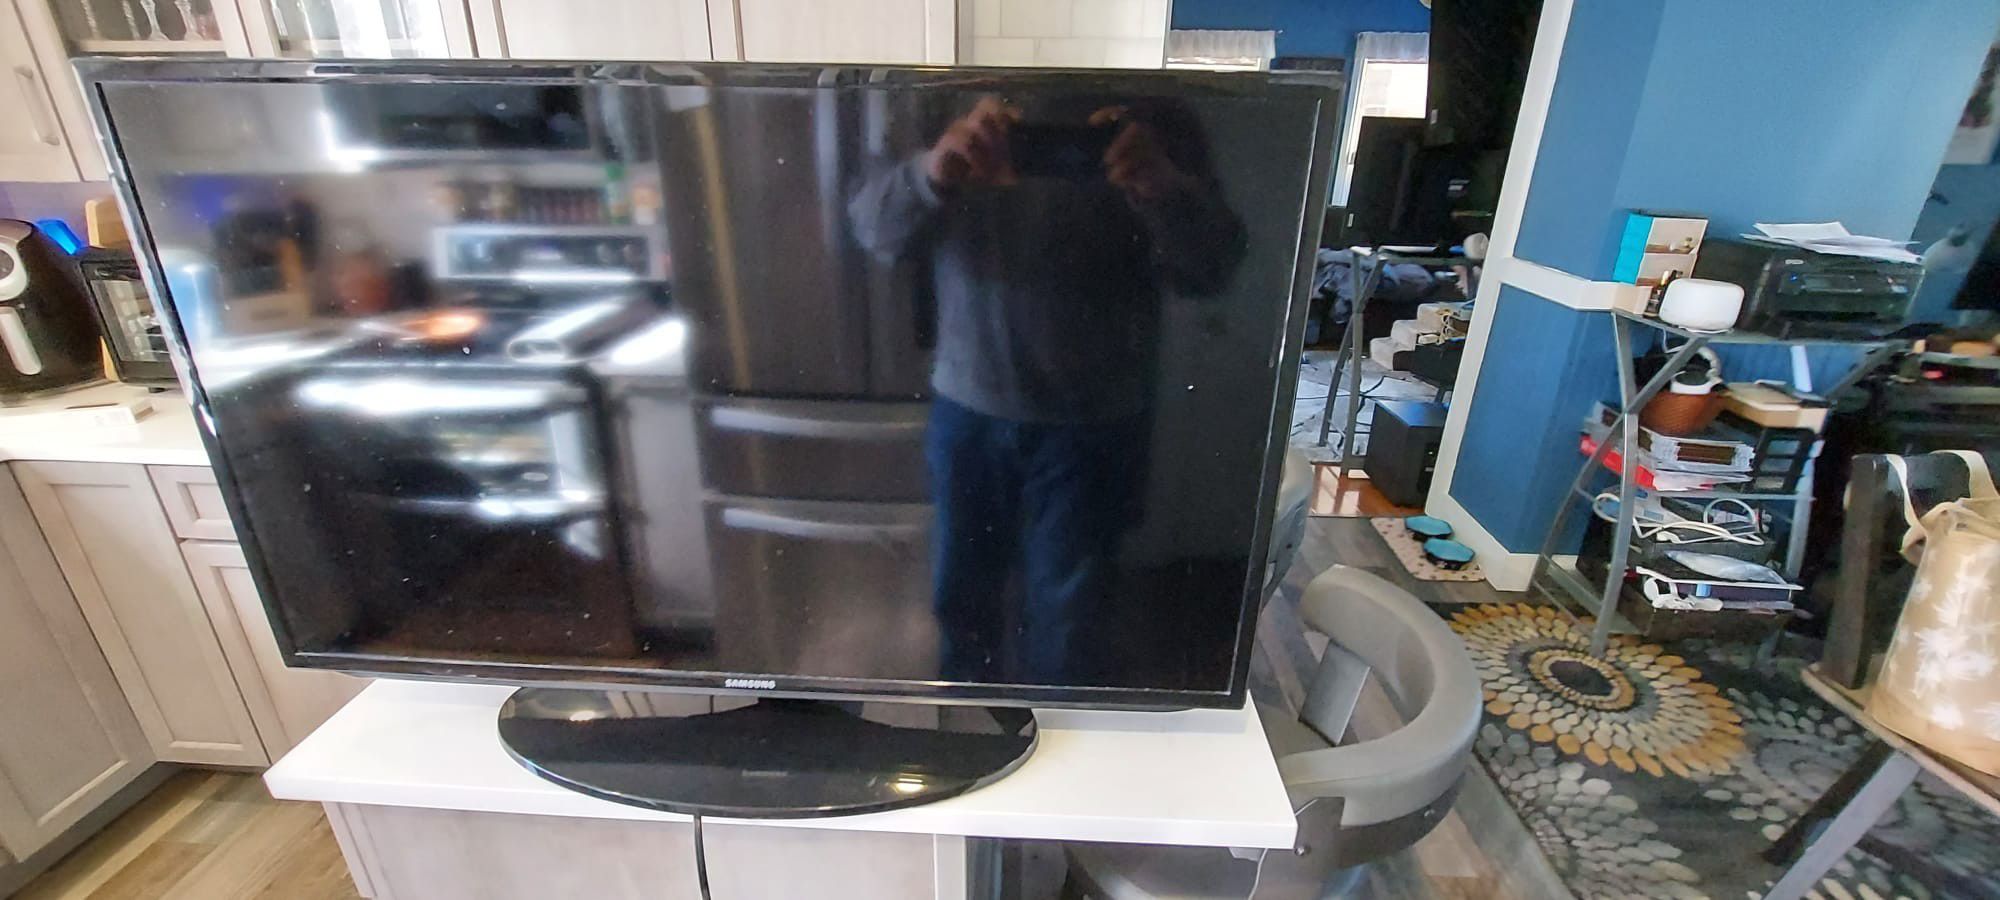 40" Samsung LED Smart TV HDTV Excellent Condition W/ Remote 